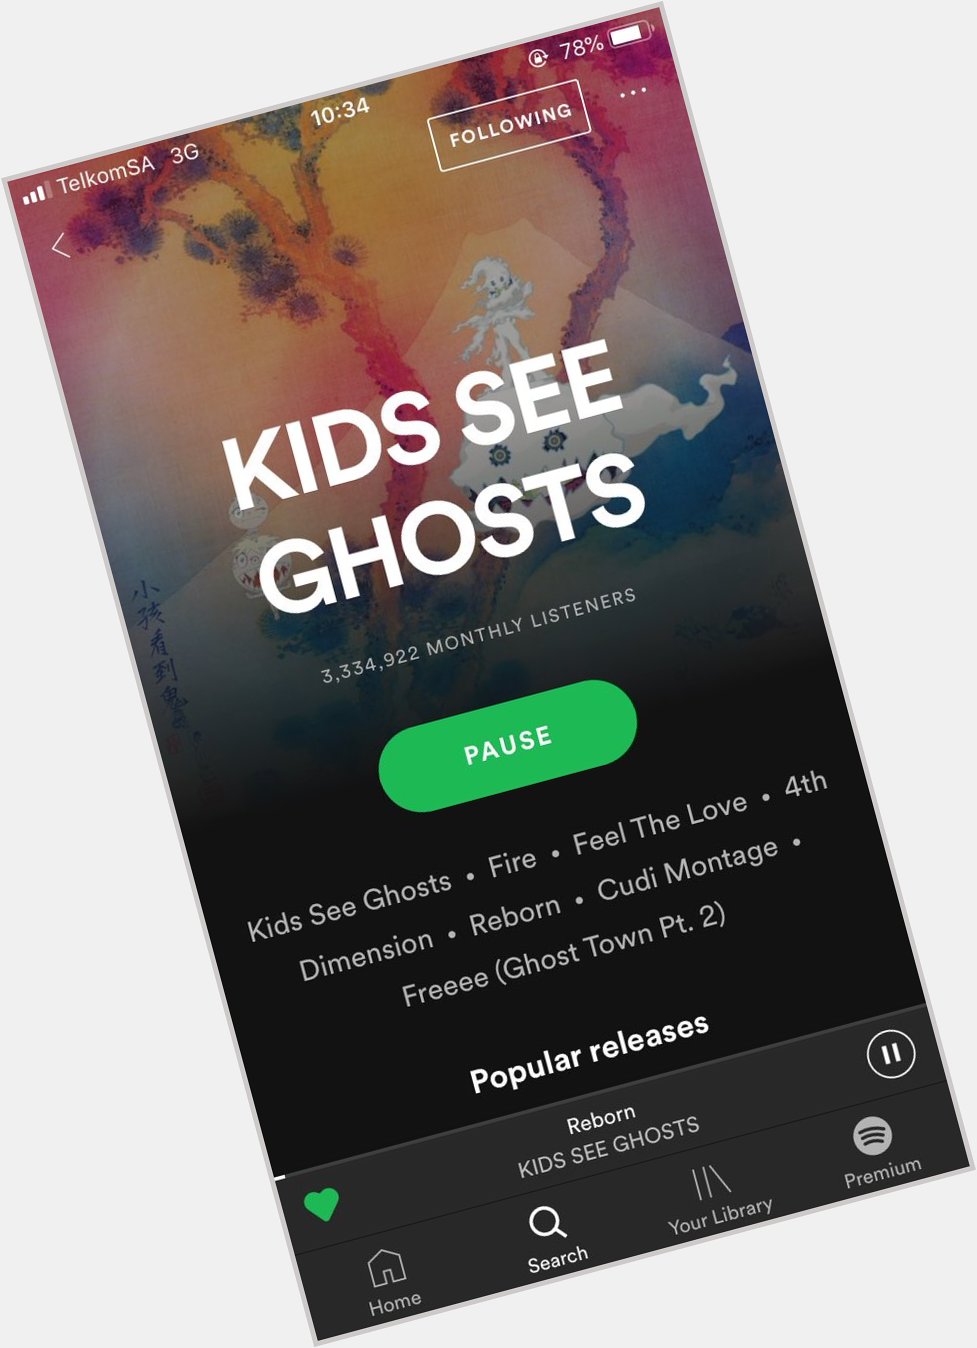 1 year ago today, Kanye & Kid Cudi released their album Kids see ghosts  Happy birthday Kanye West  